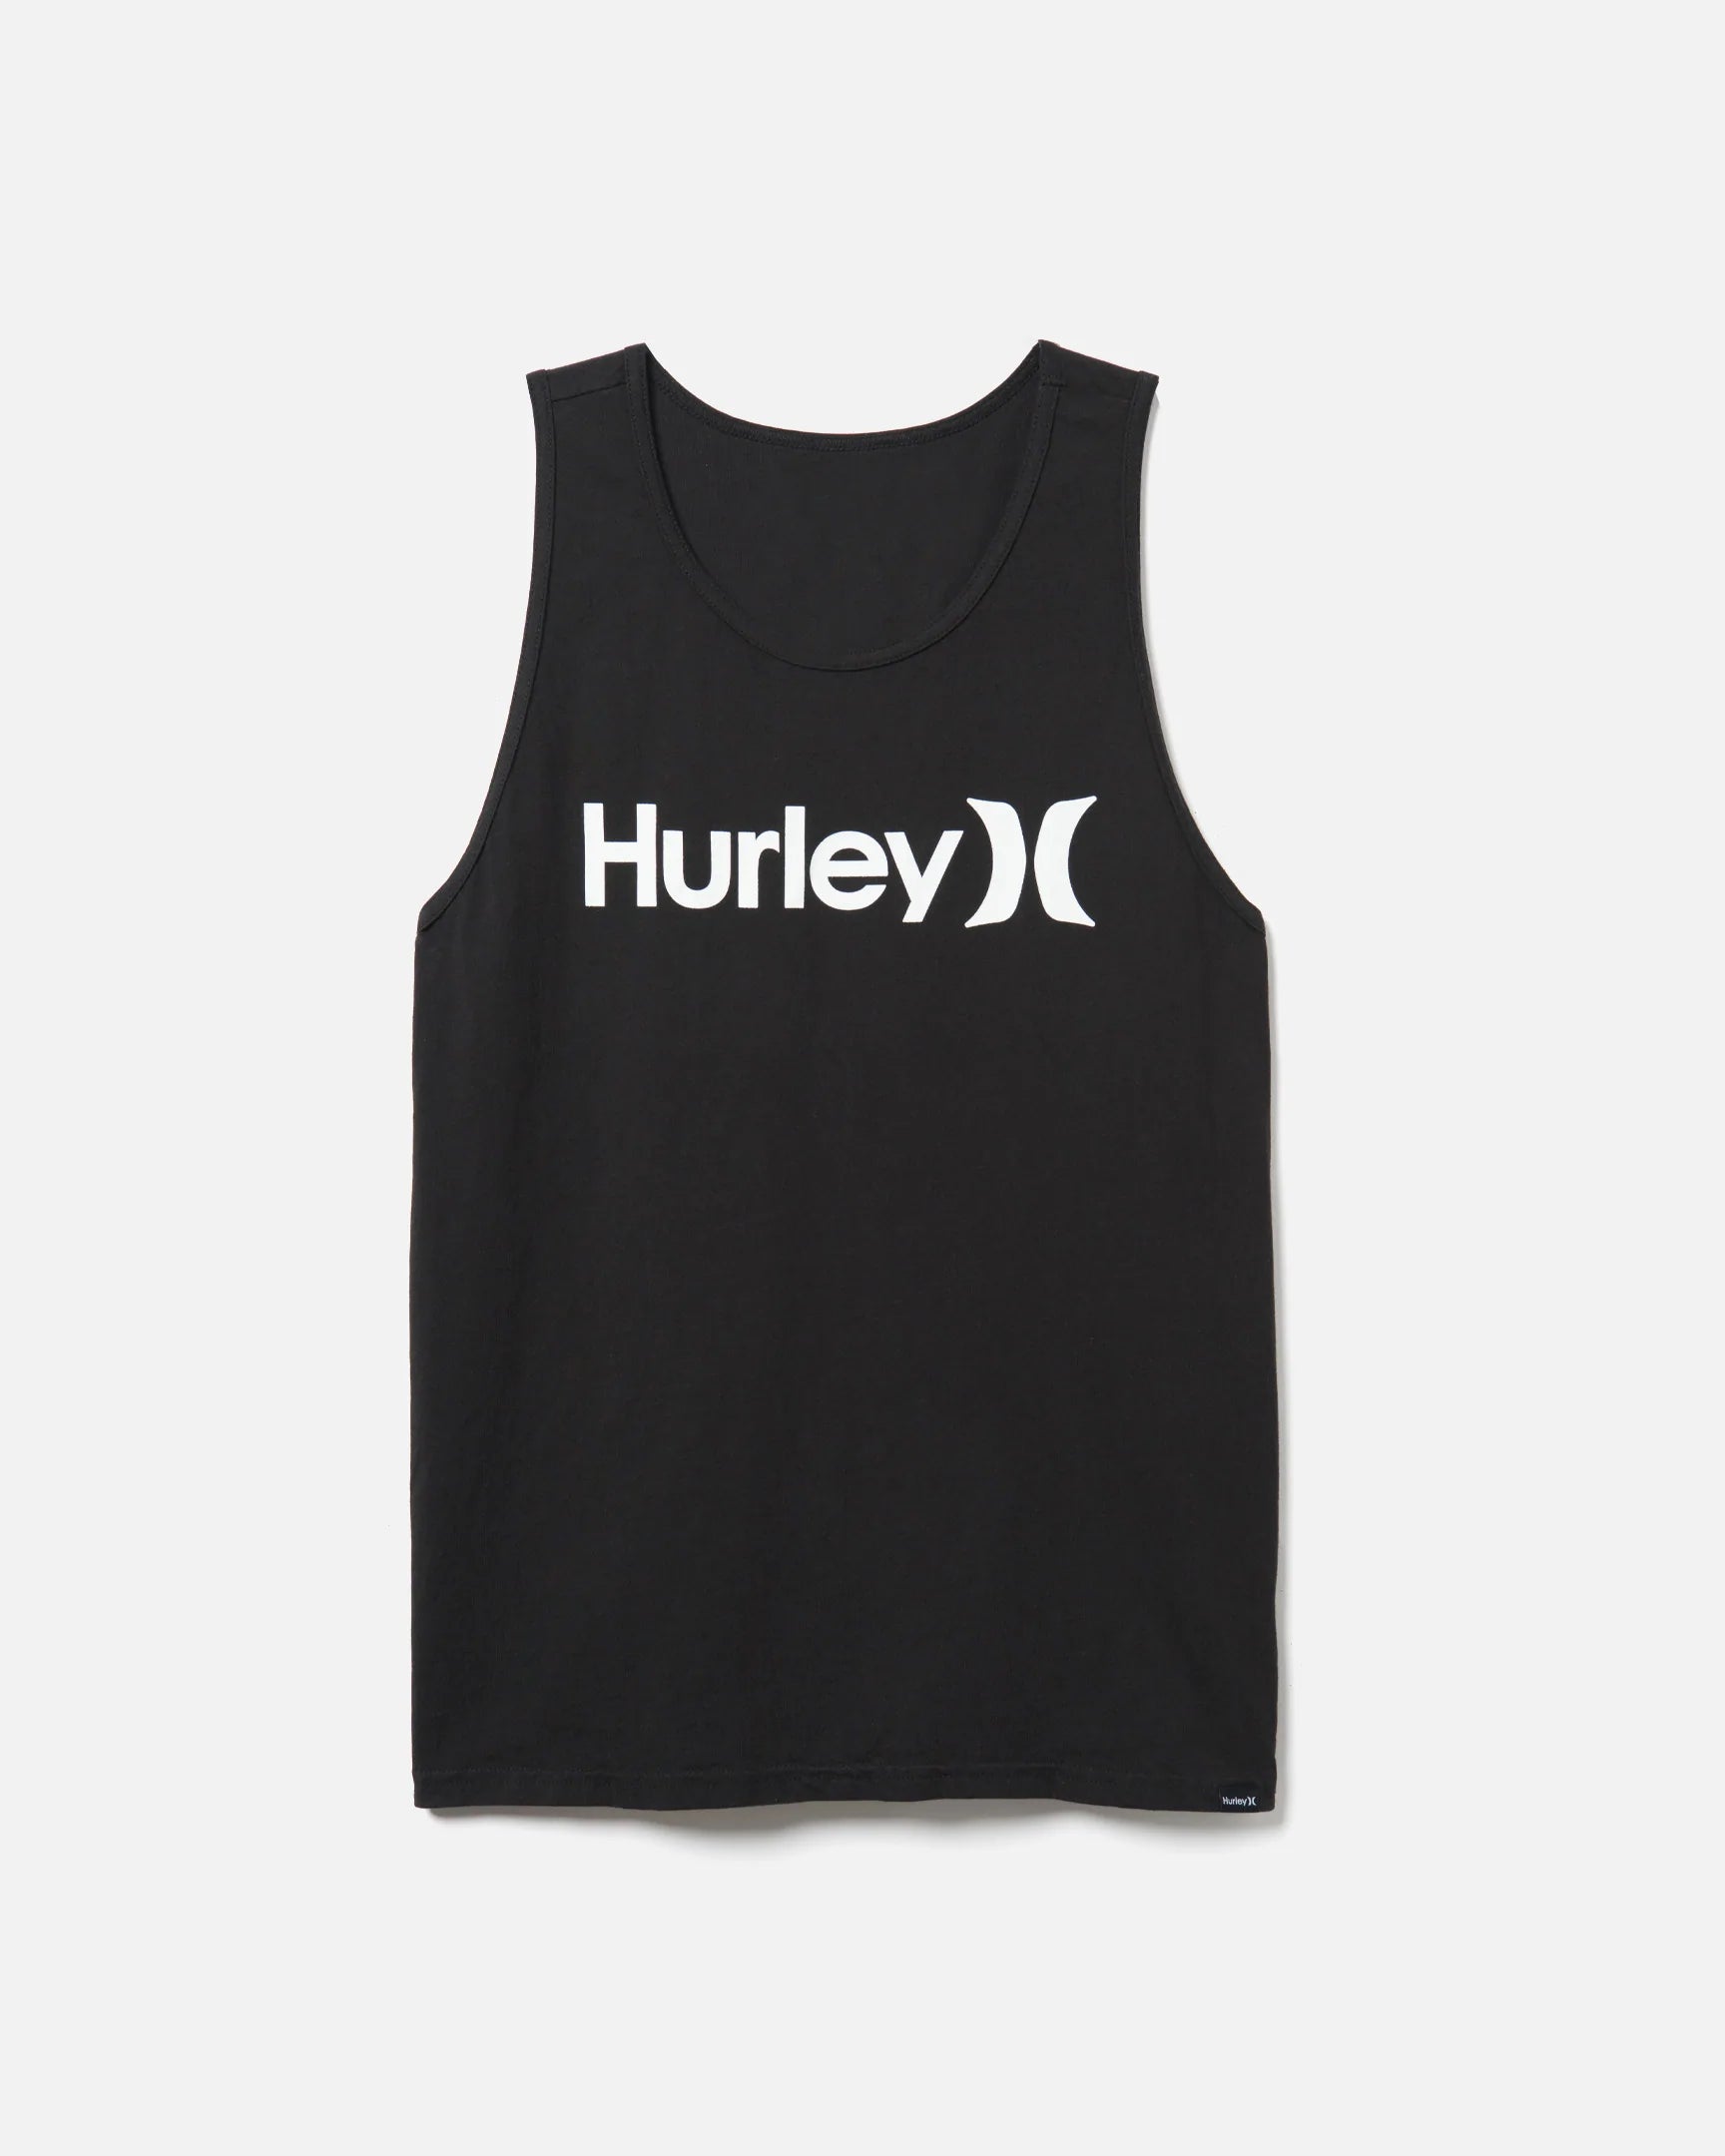 Hurley Classic Logo Tank Top - Black/White